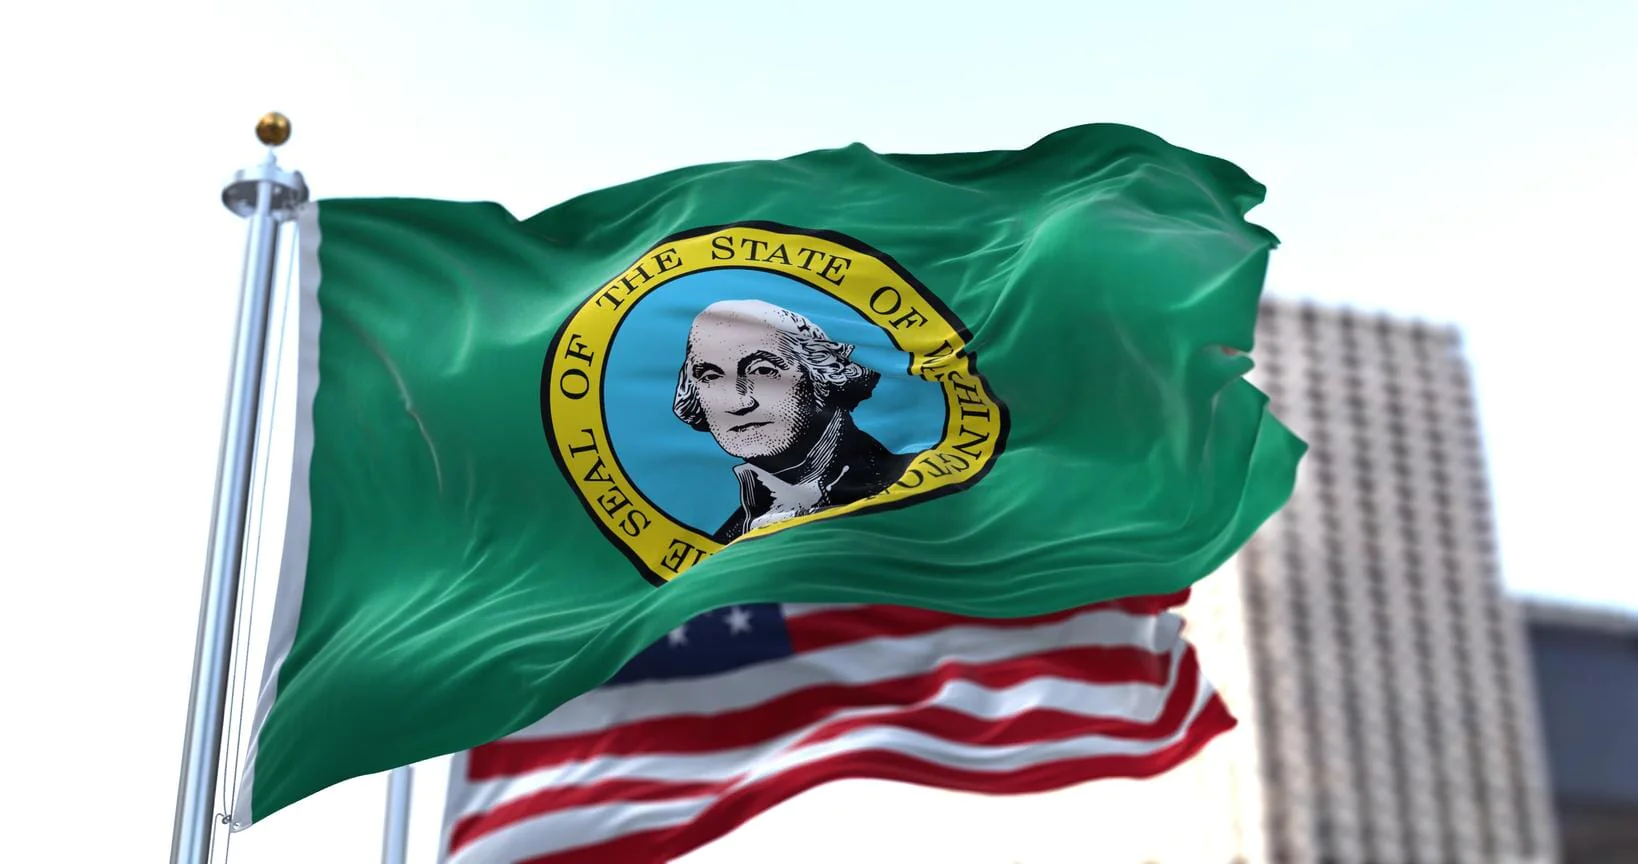 The Washington State Flag